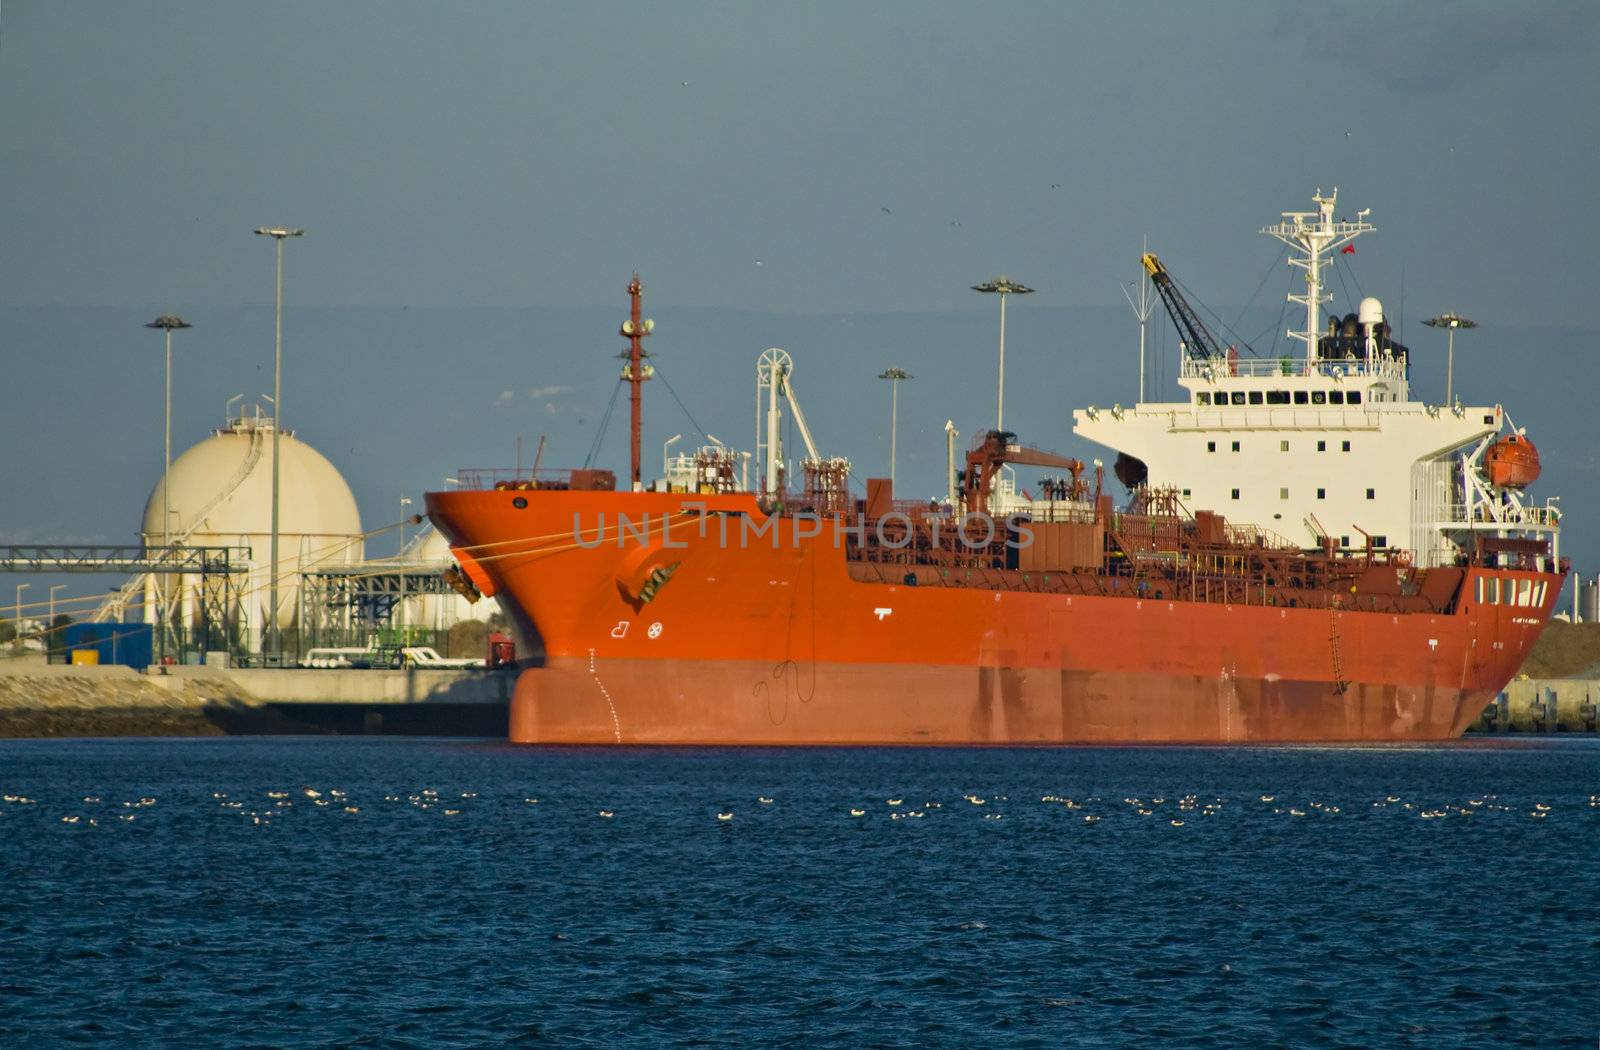 Big cargo container ship unloading